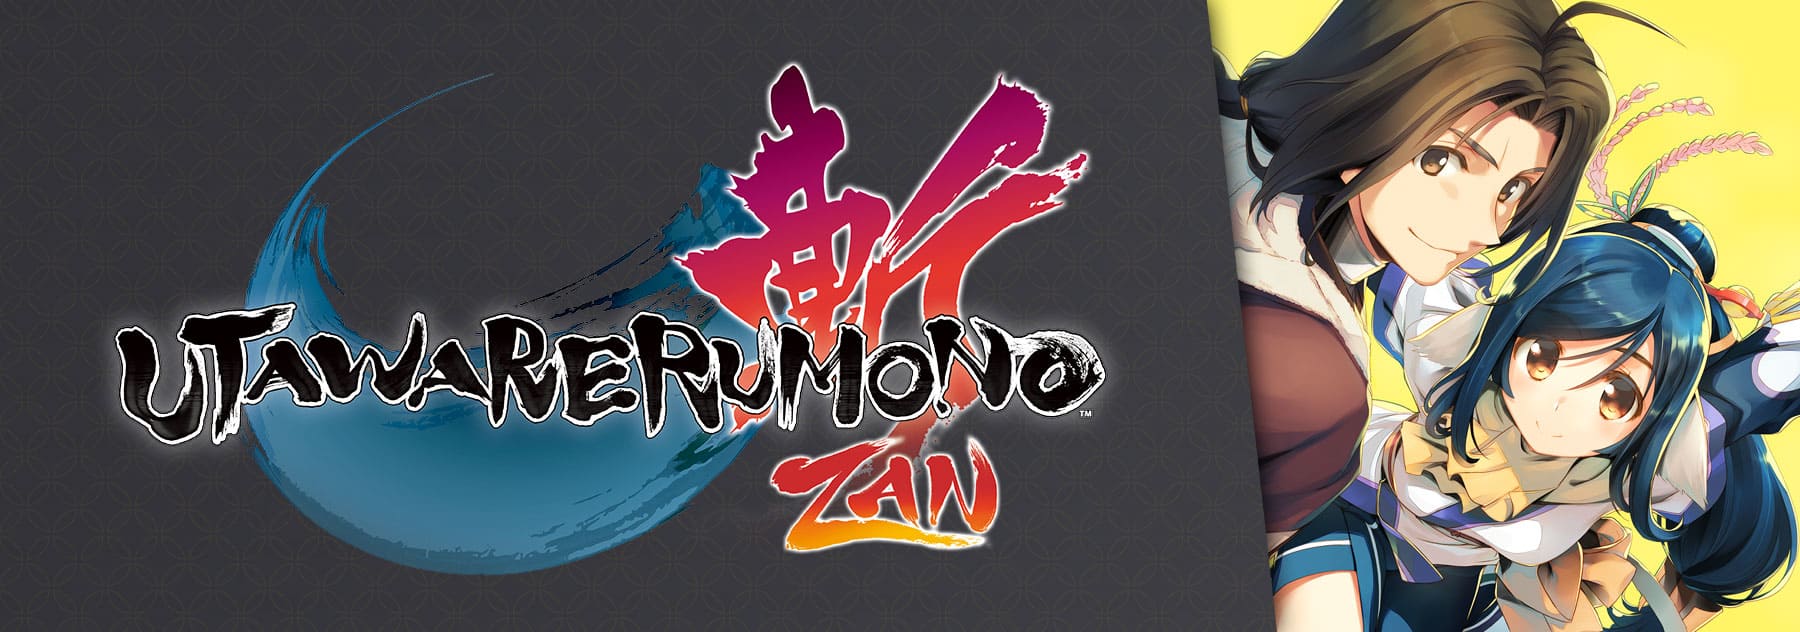 Read more about the article Utawarerumono Zan Review [PS4]